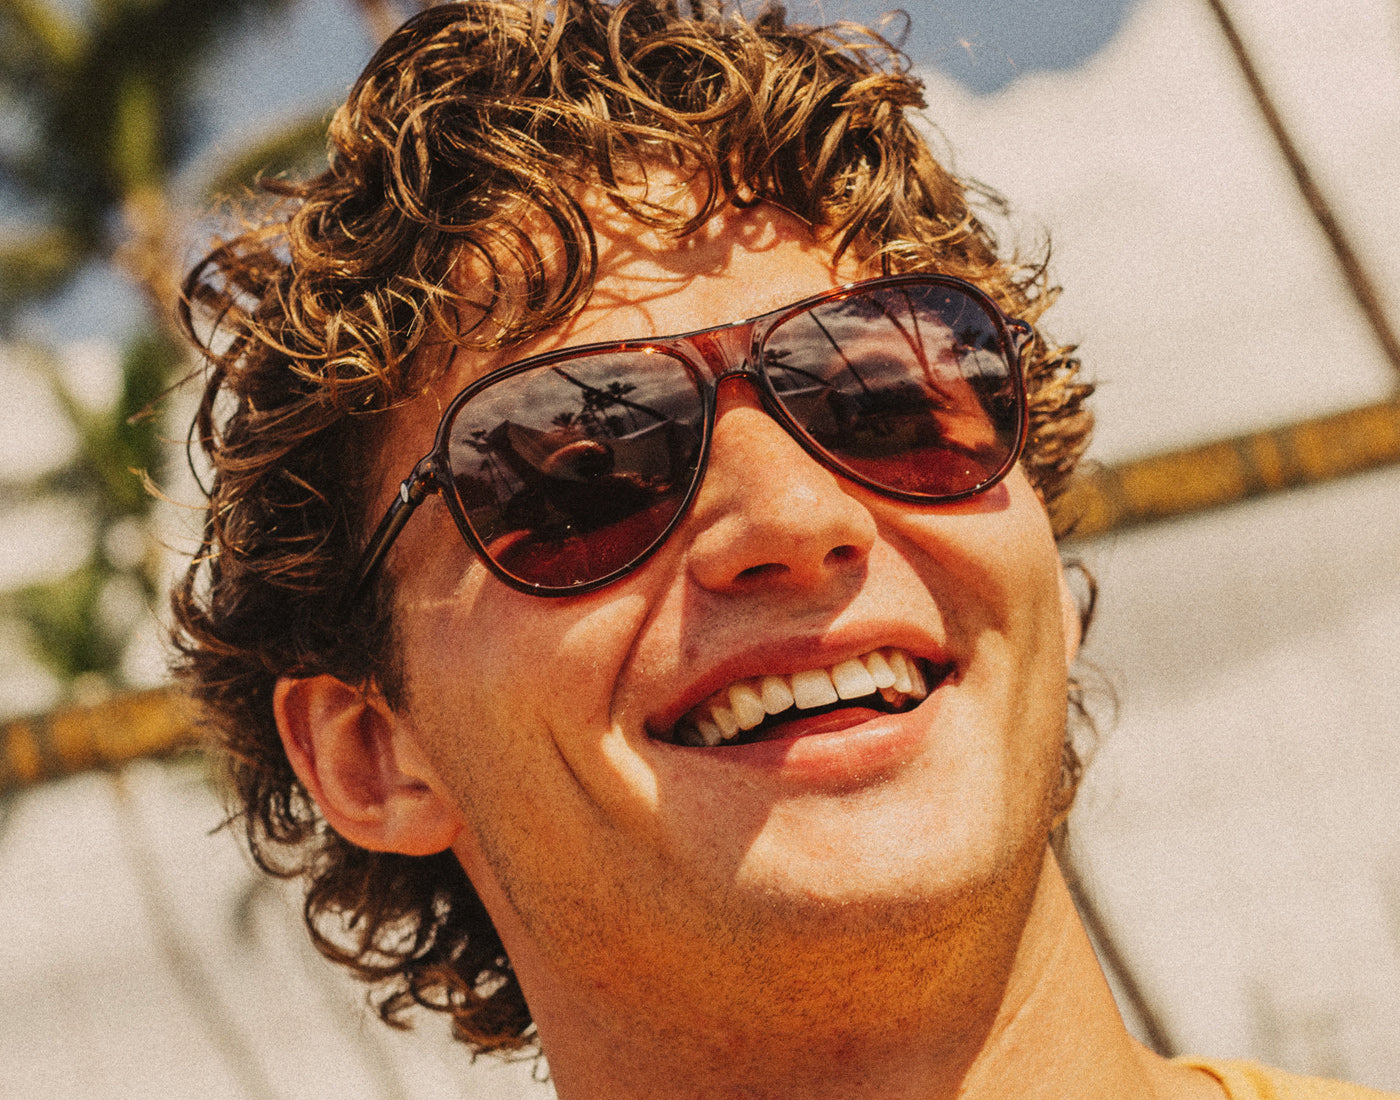 guy laughing wearing sunski foxtrot sunglasses